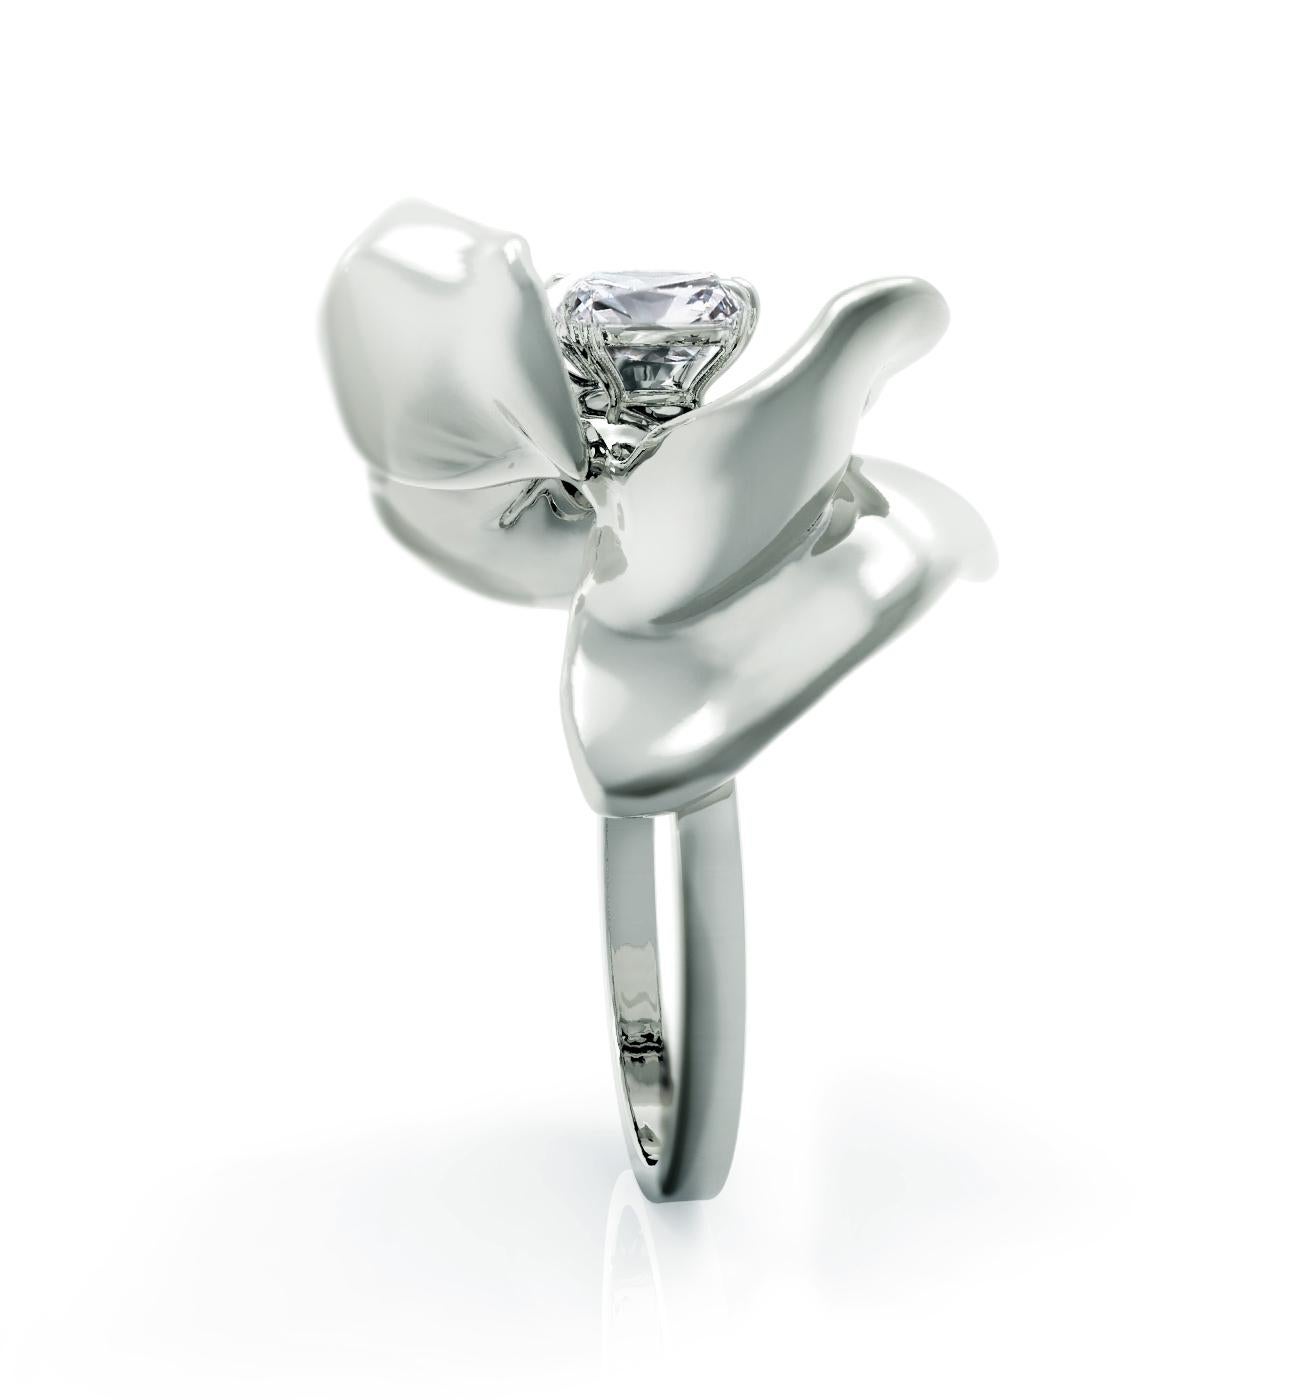 Artist Eighteen Karat White Gold Engagement Ring with Emerald Cut Diamond For Sale